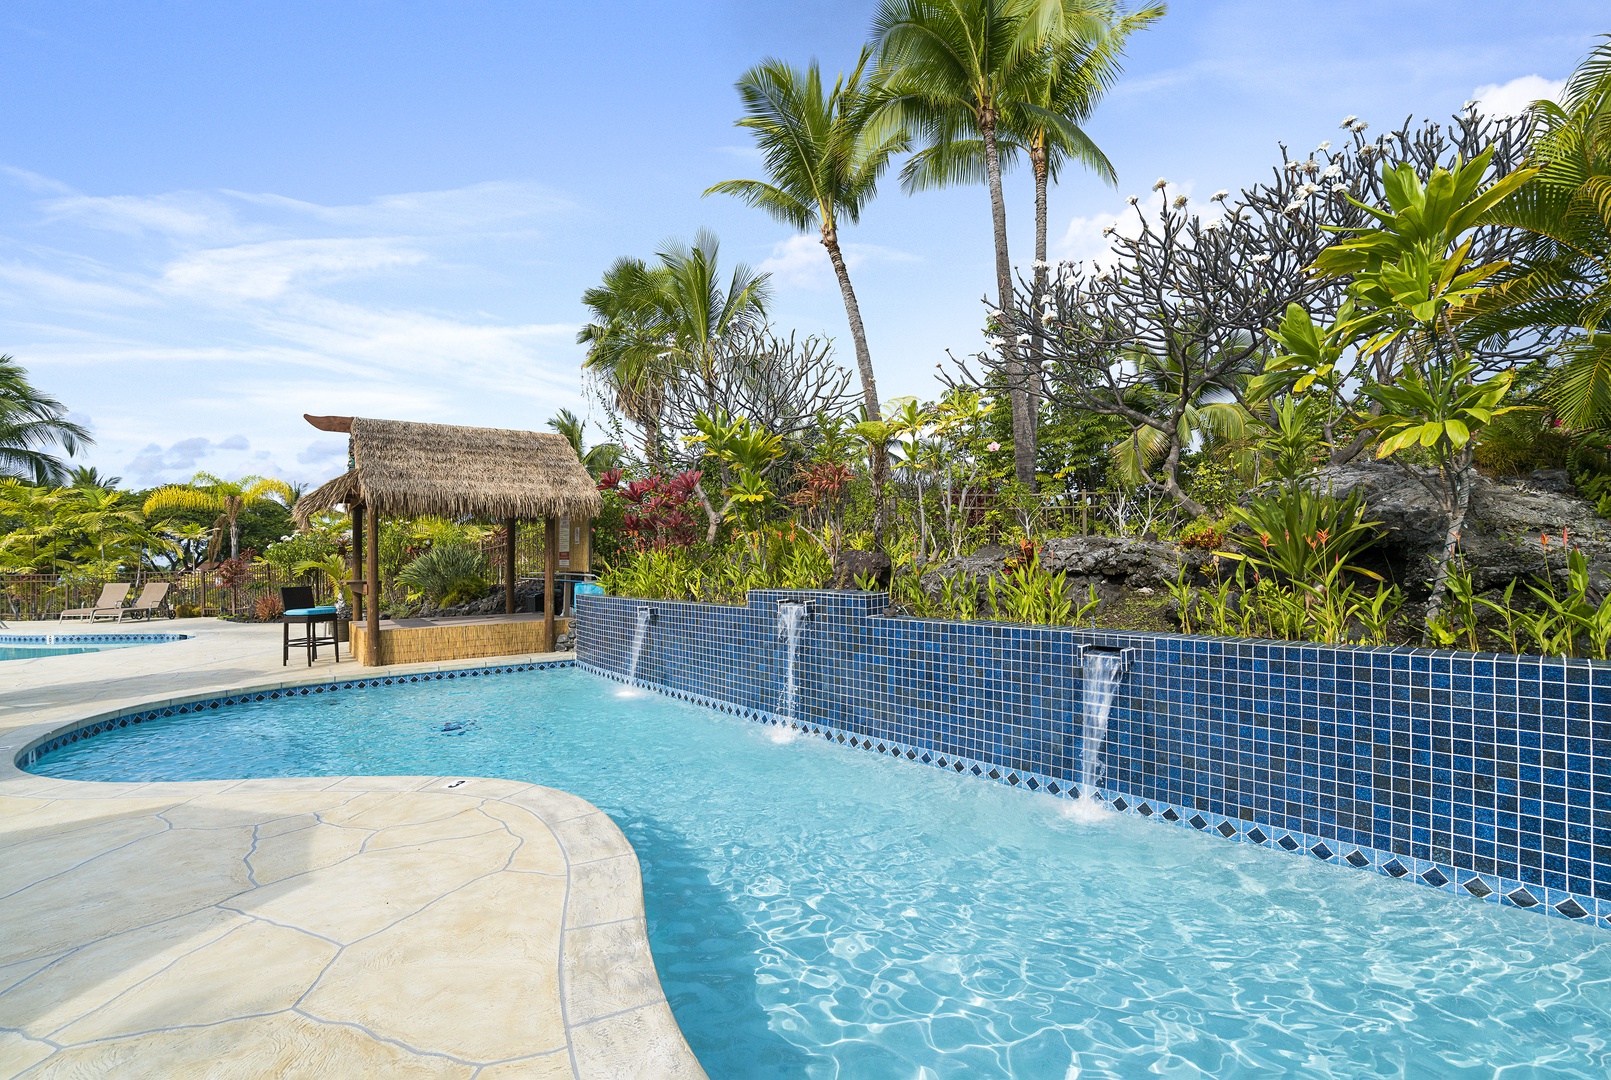 Kailua Kona Vacation Rentals, Keauhou Resort 113 - Tranquil water features!